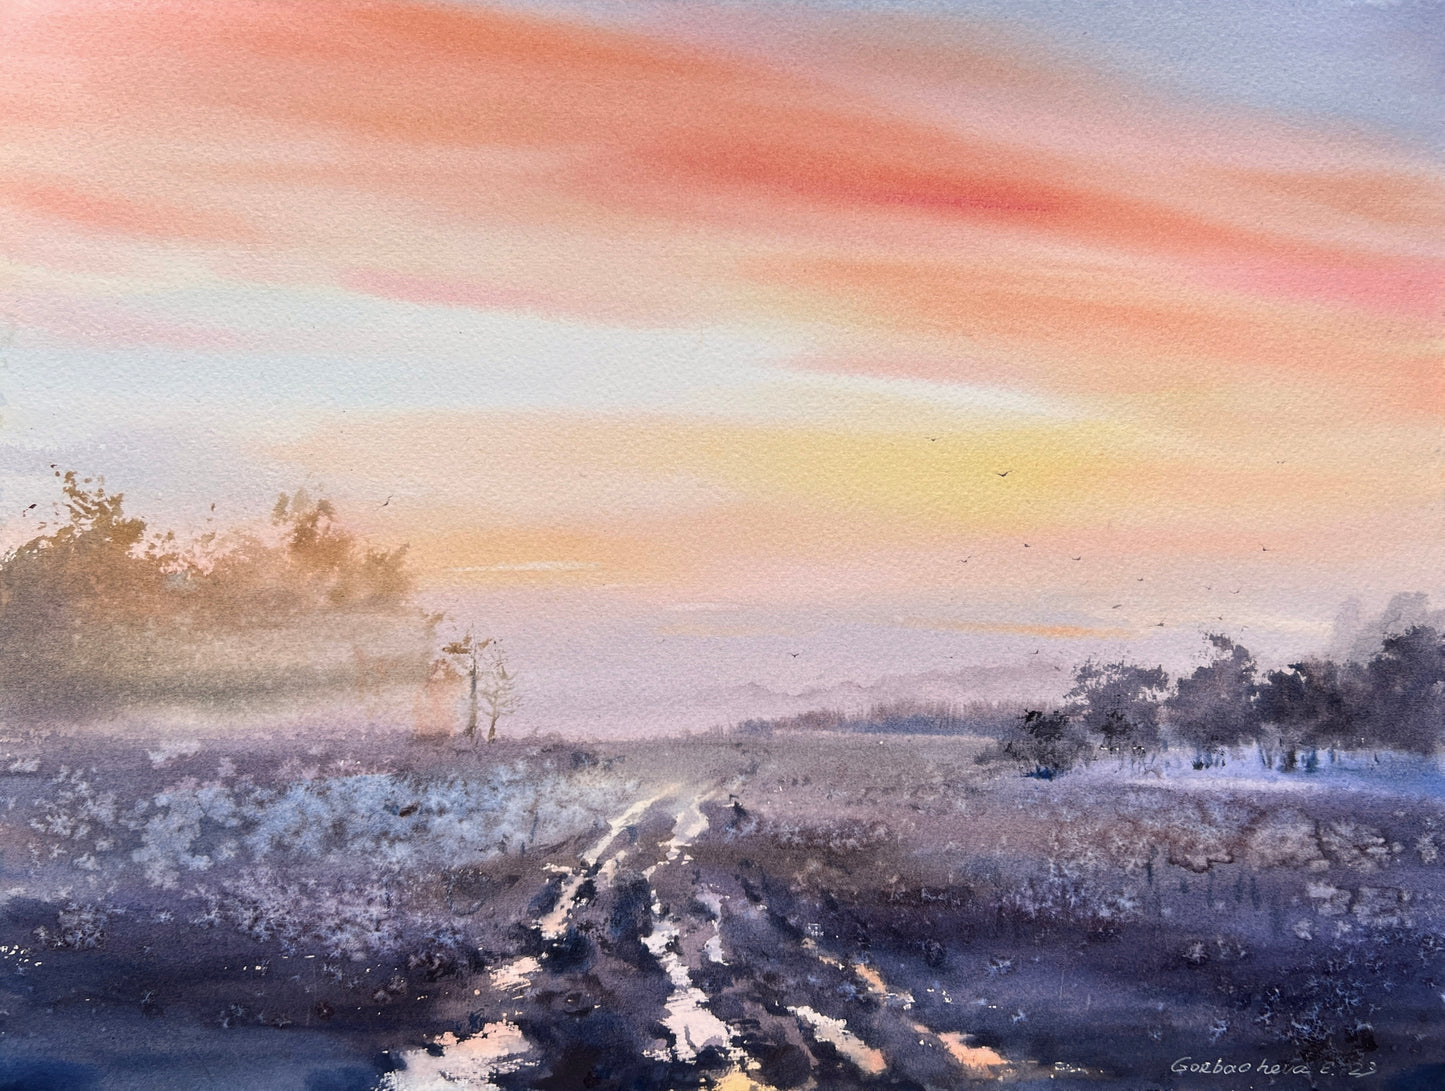 Sunset Landscape Painting Original Watercolor, Handmade Artwork For Home, Warming Decor, Gift, Foggy Morning